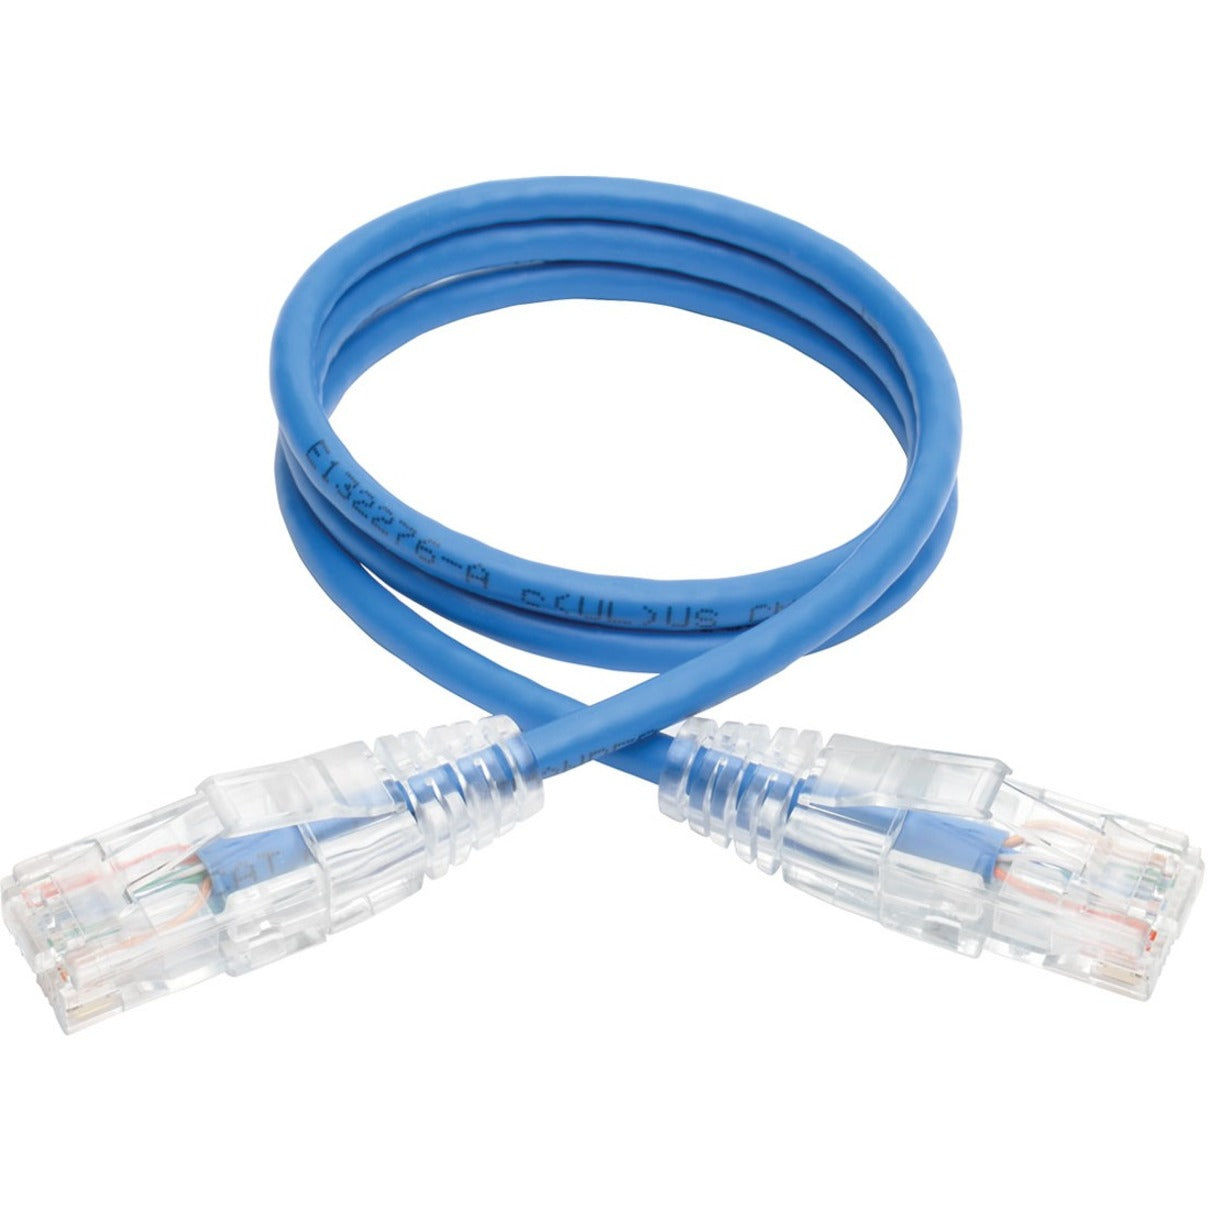 Tripp Lite N201-S02-BL Cat6 Gigabit Snagless Molded Slim UTP Patch Cable (RJ45 M/M) Blue 2ft  트립 라이트 N201-S02-BL Cat6 기가비트 스내글레스 성형 슬림 UTP 패치 케이블 (RJ45 M/M) 파란색 2ft